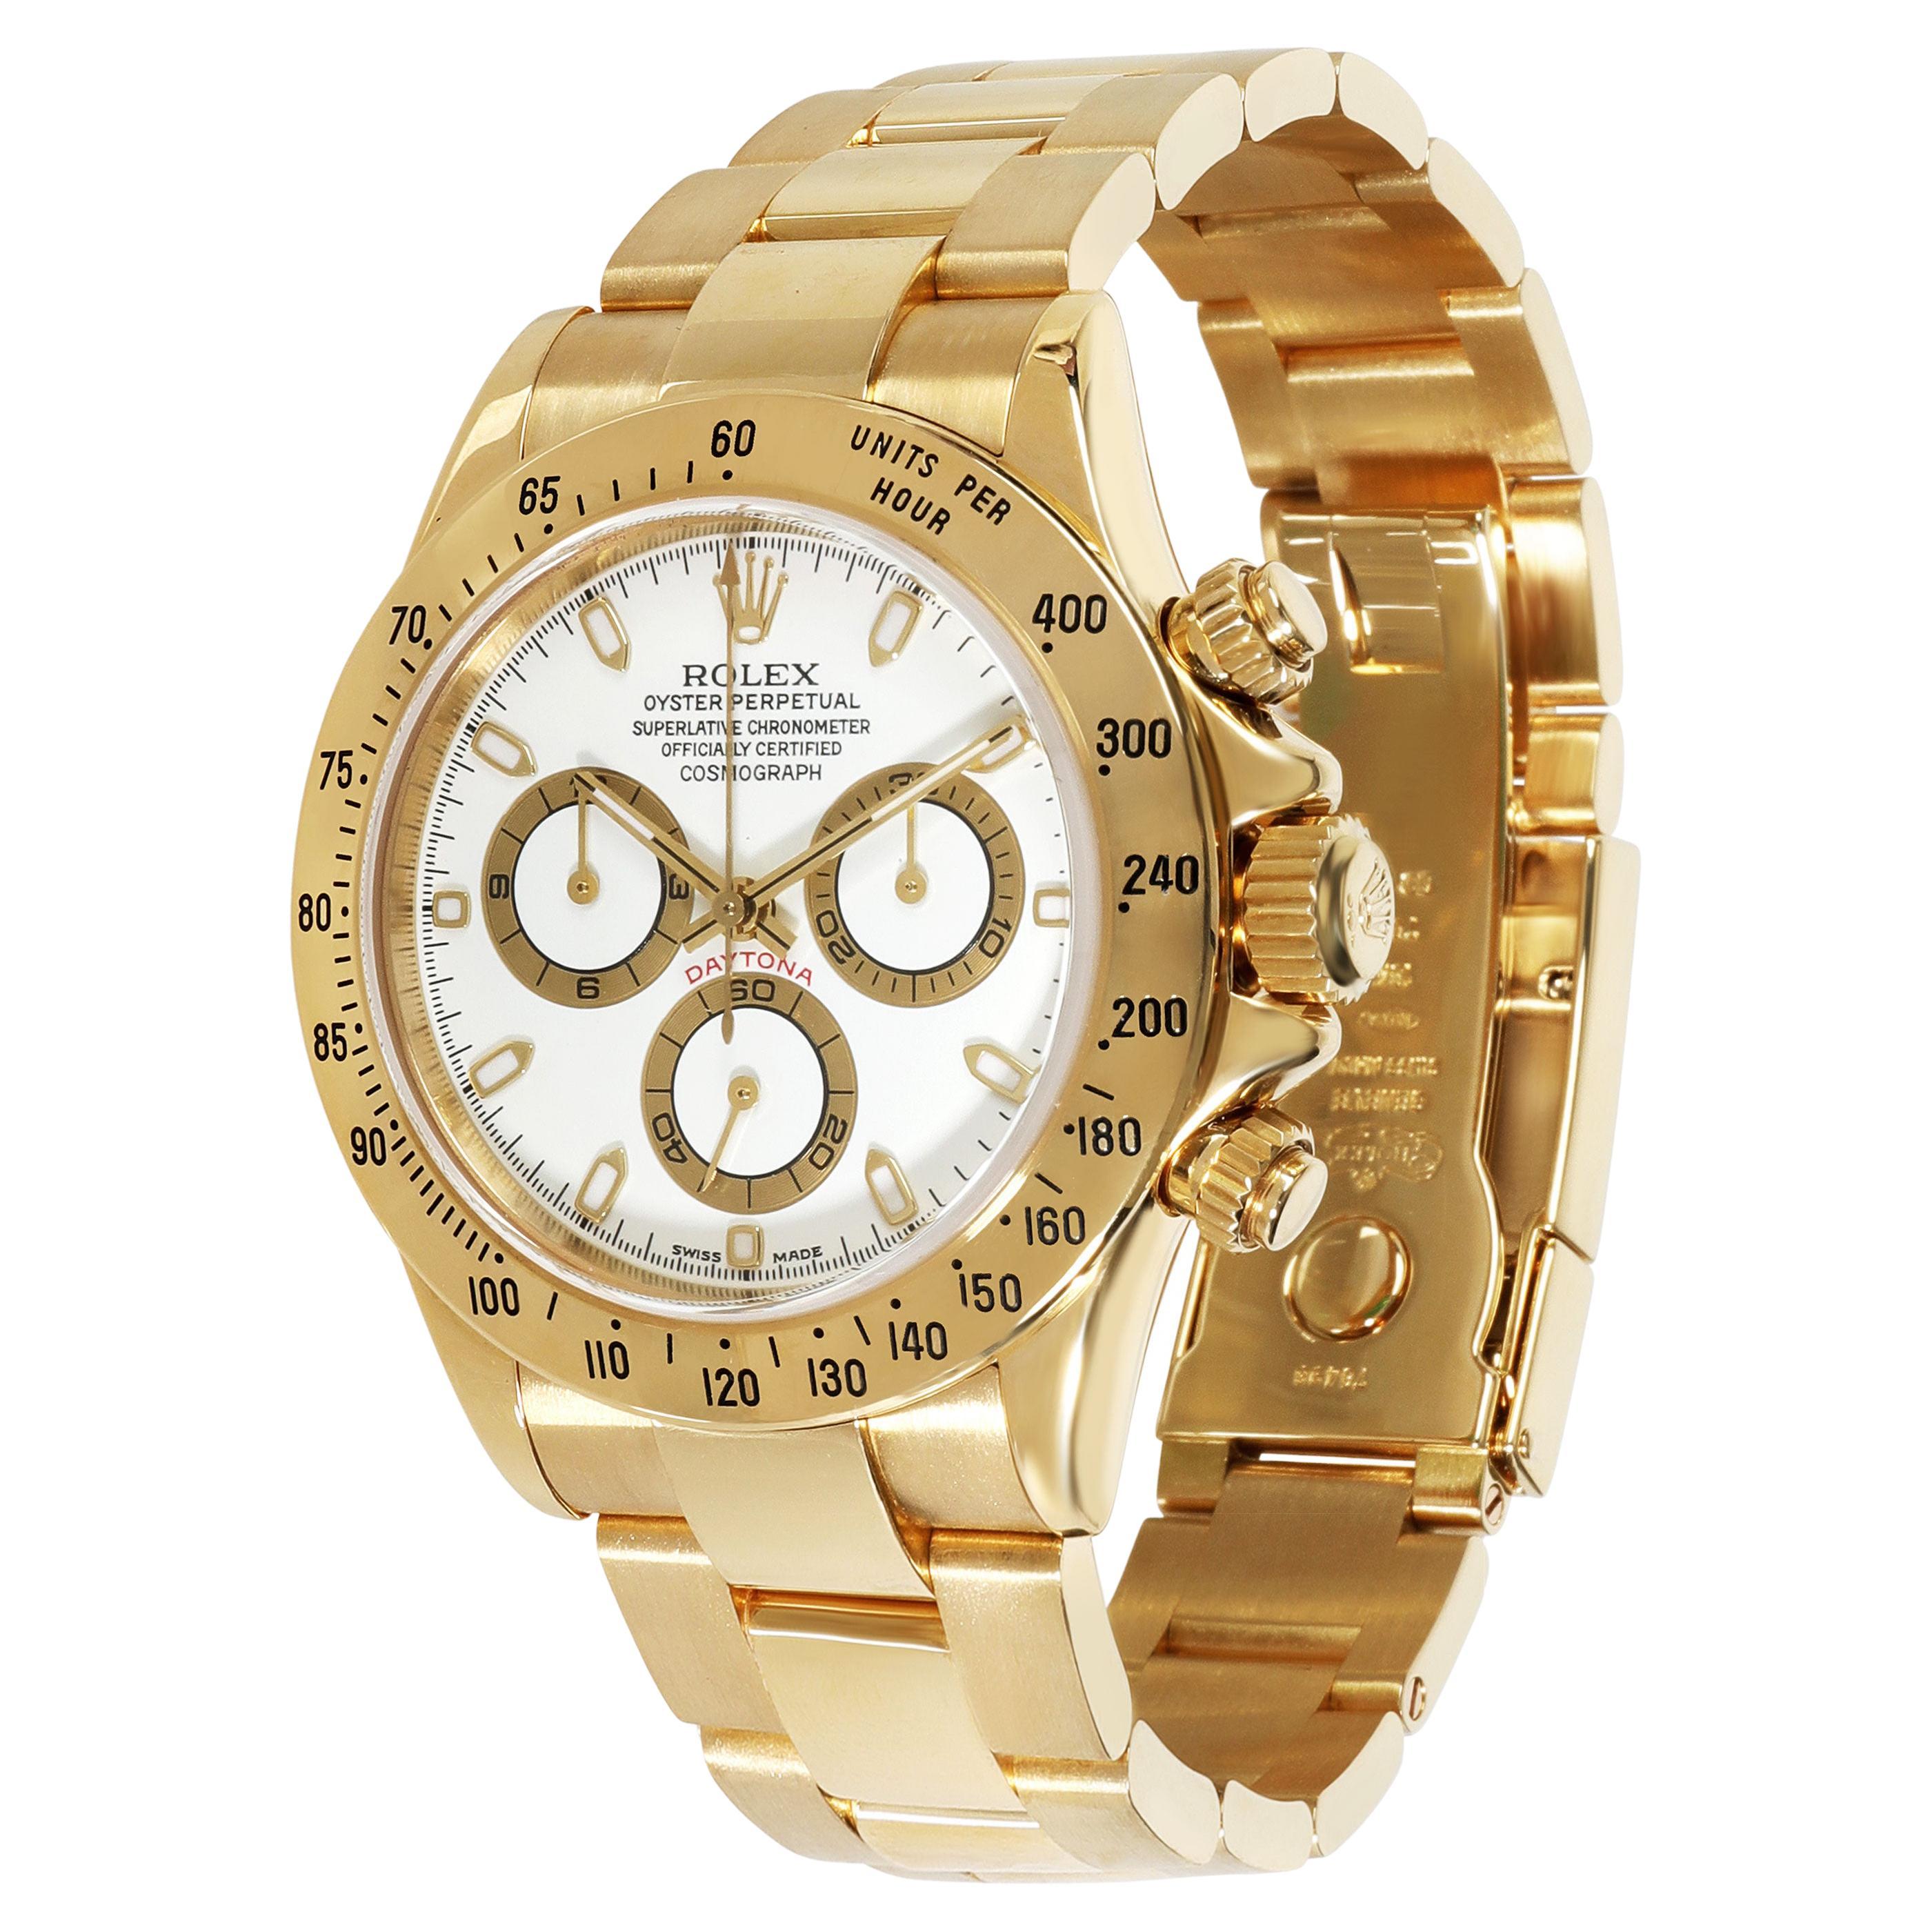 Rolex Cosmograph Daytona 116528 Men's Watch in 18kt Yellow Gold